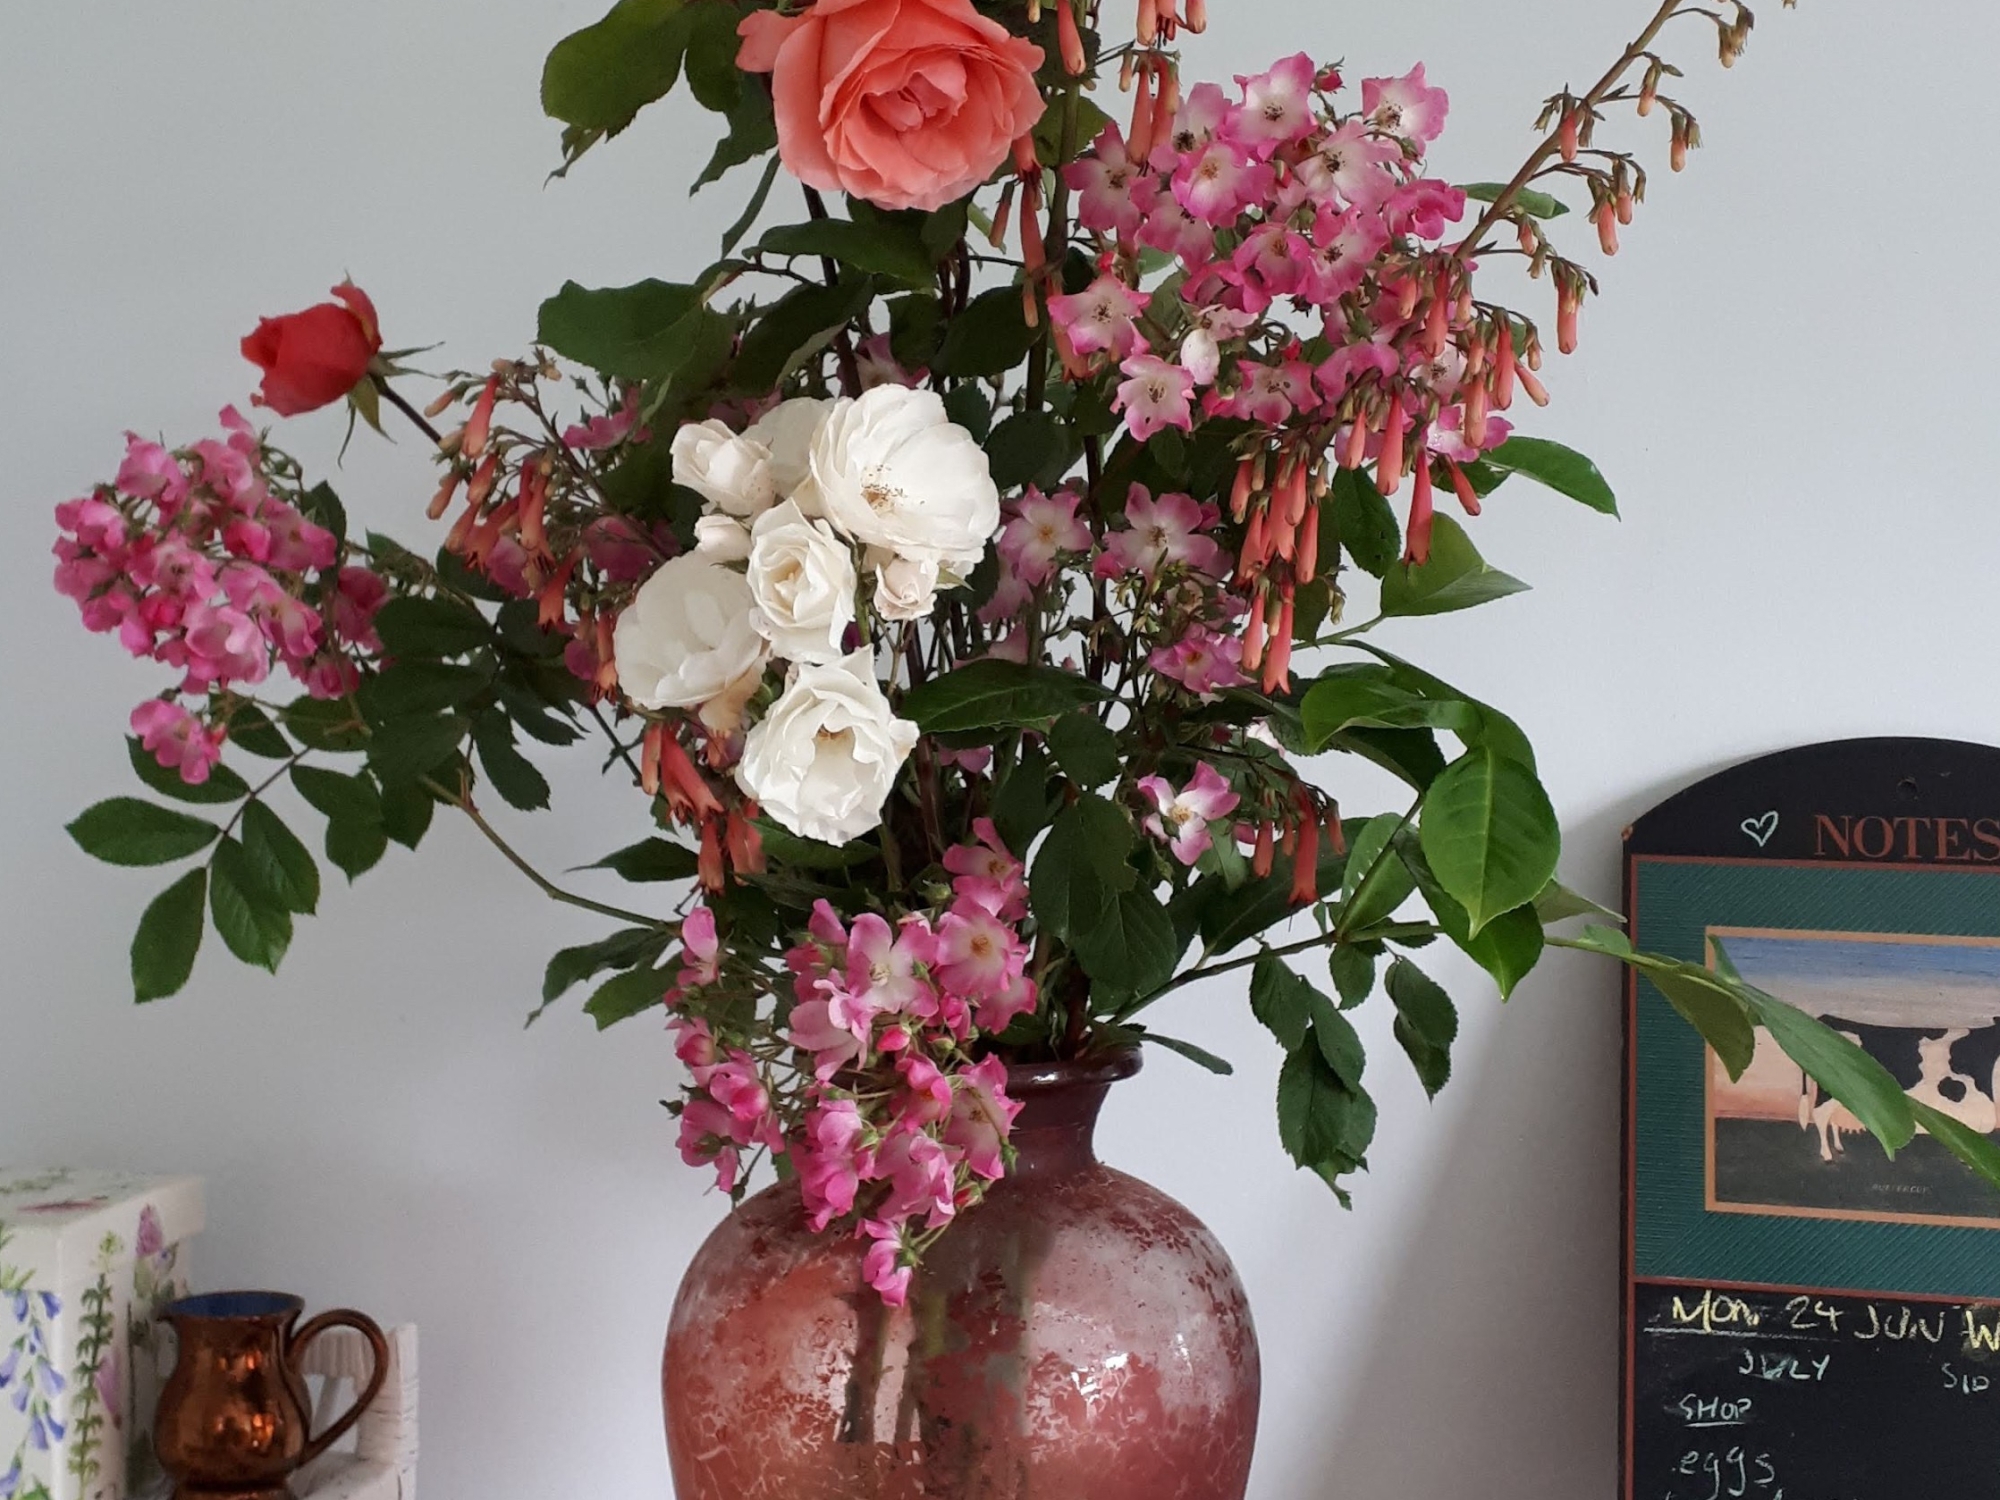 Roses, penstemon, and laurel in a big red vase